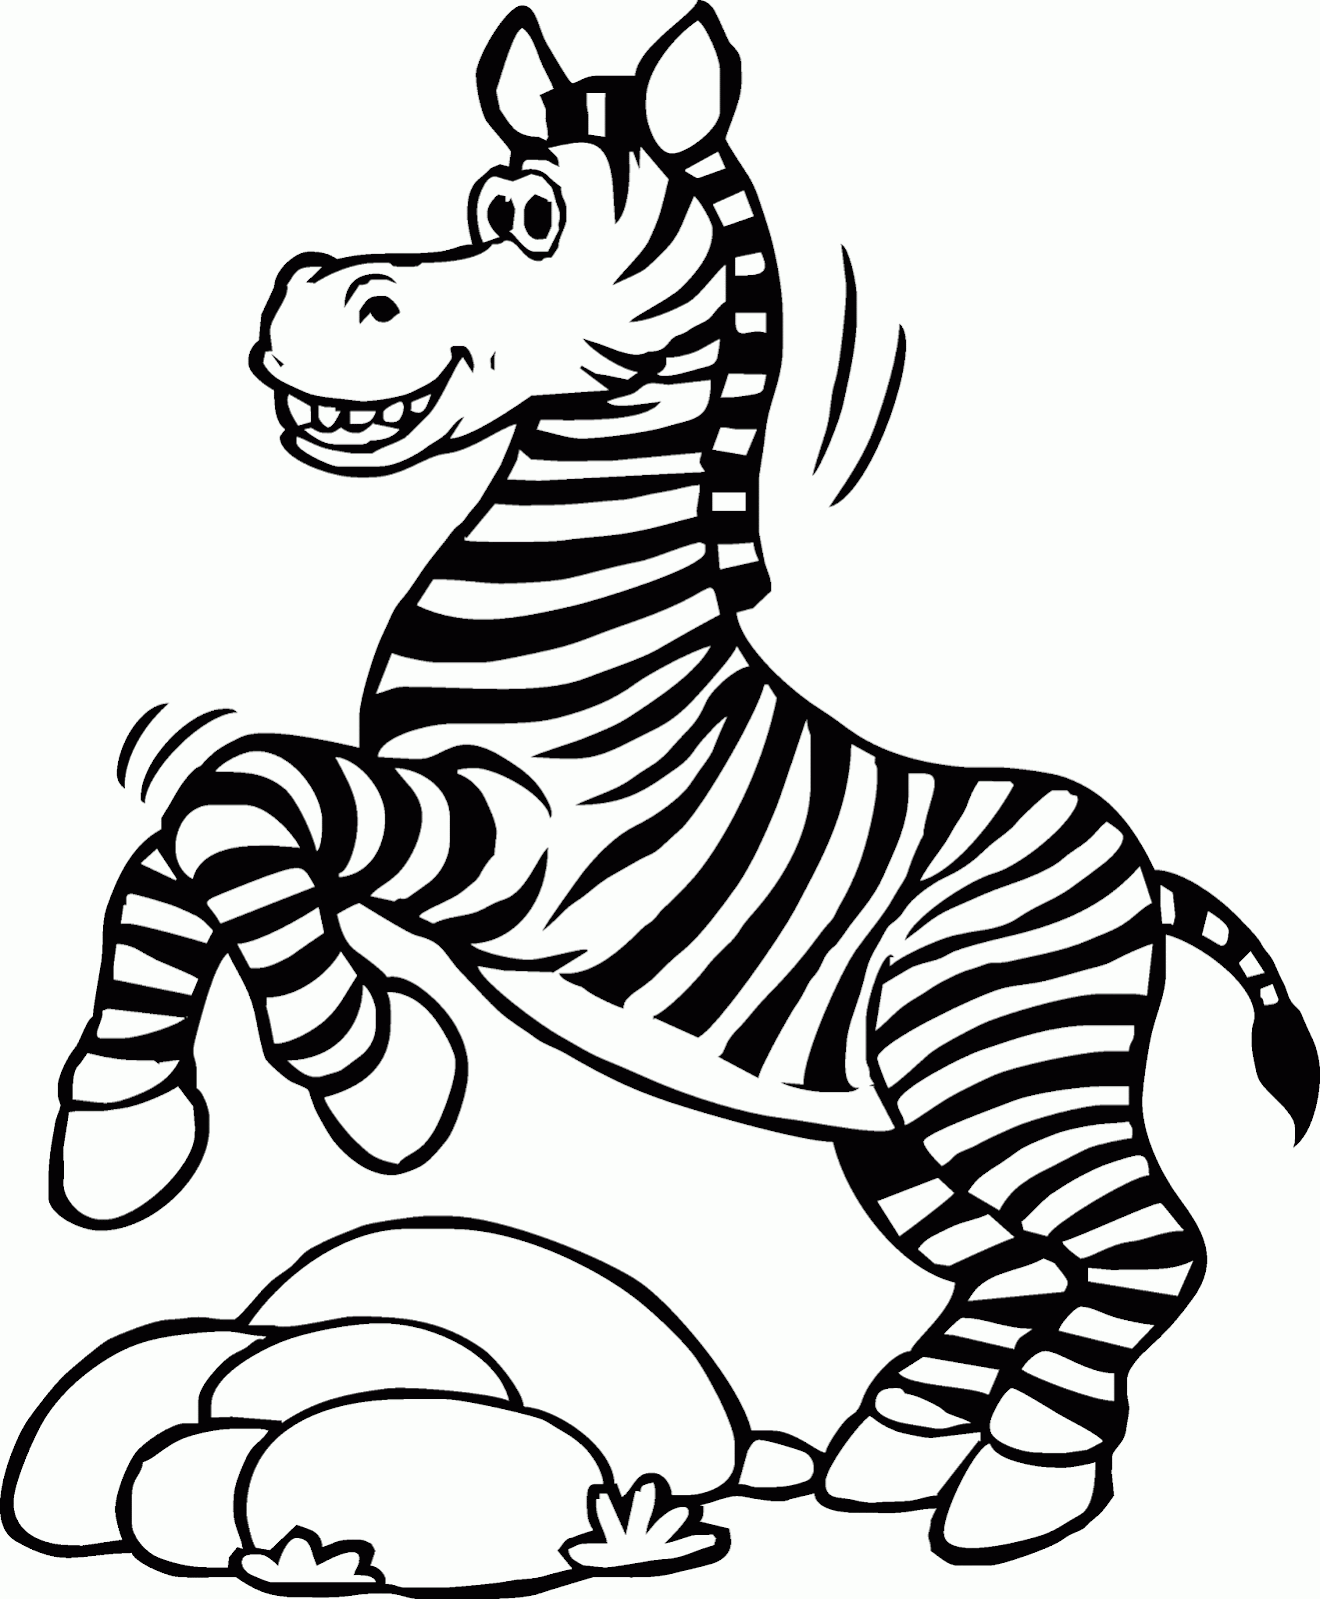 Kumpulan Gambar Kartun Binatang Zebra Terbaru Sobponsel